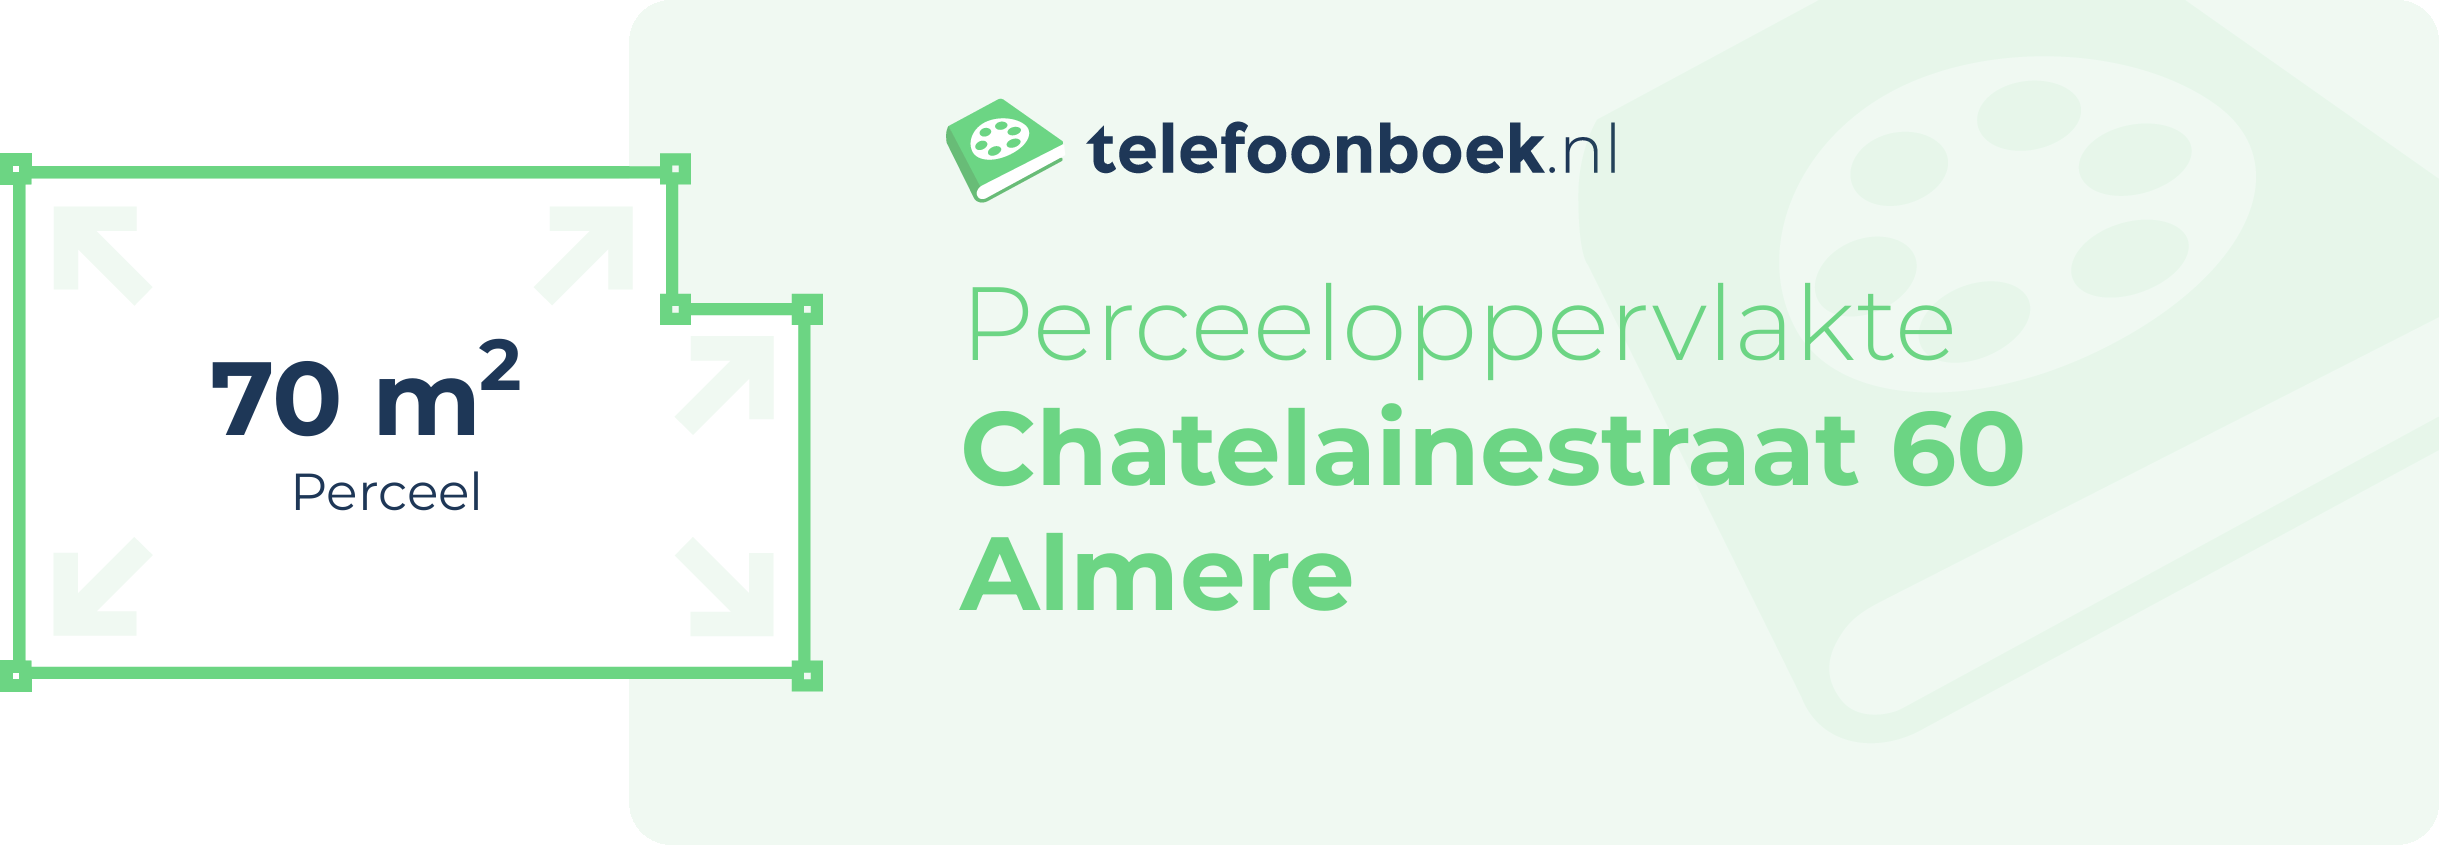 Perceeloppervlakte Chatelainestraat 60 Almere